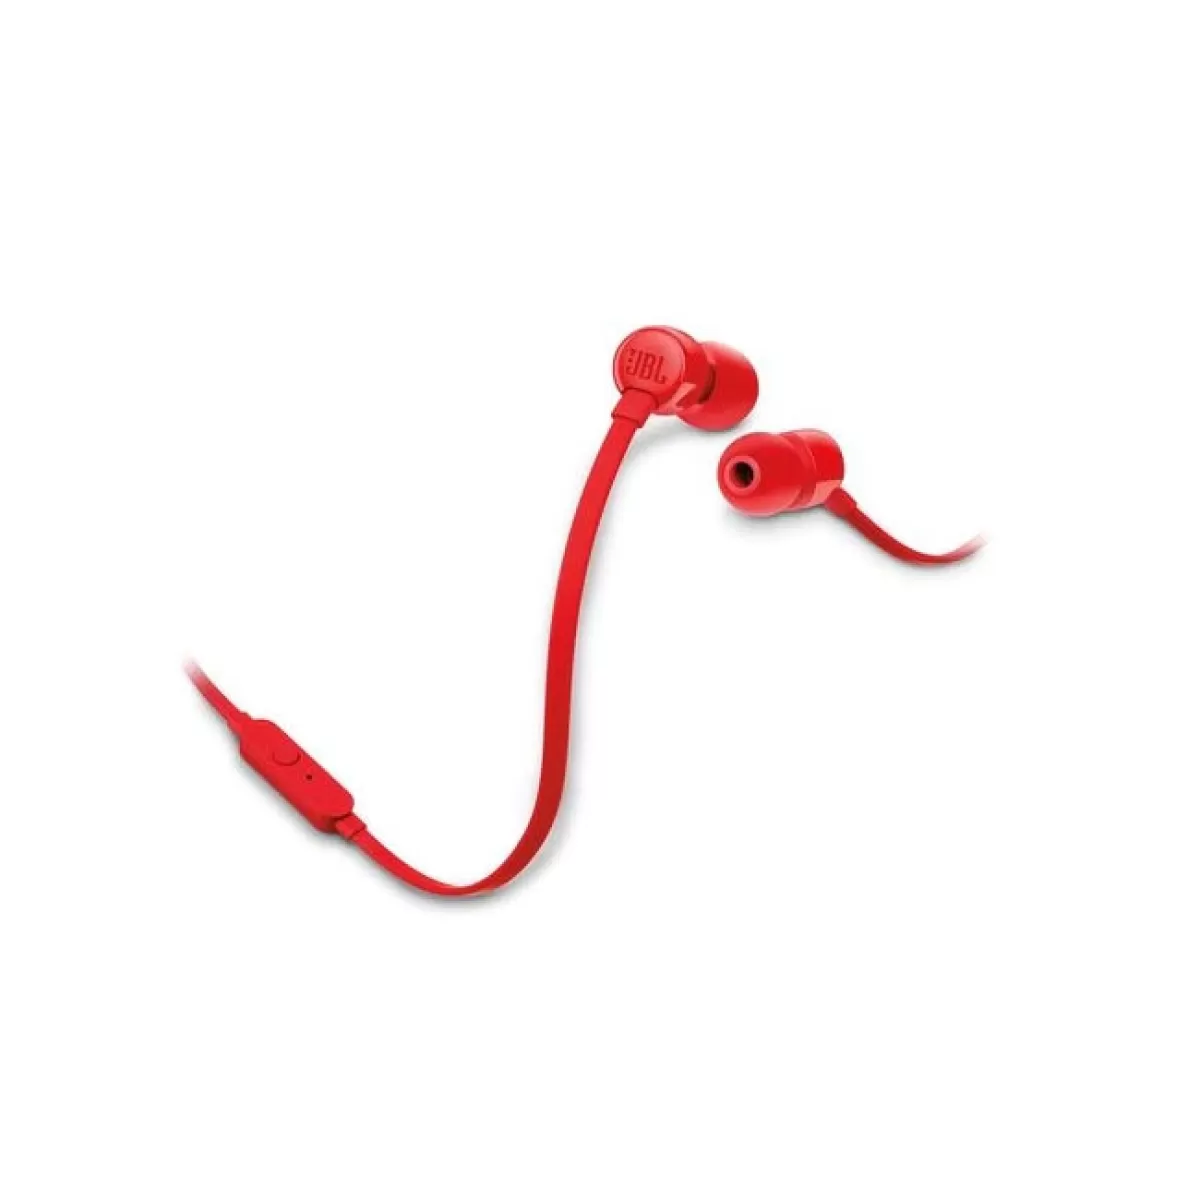 Слушалки JBL T110 In ear headphones Червени